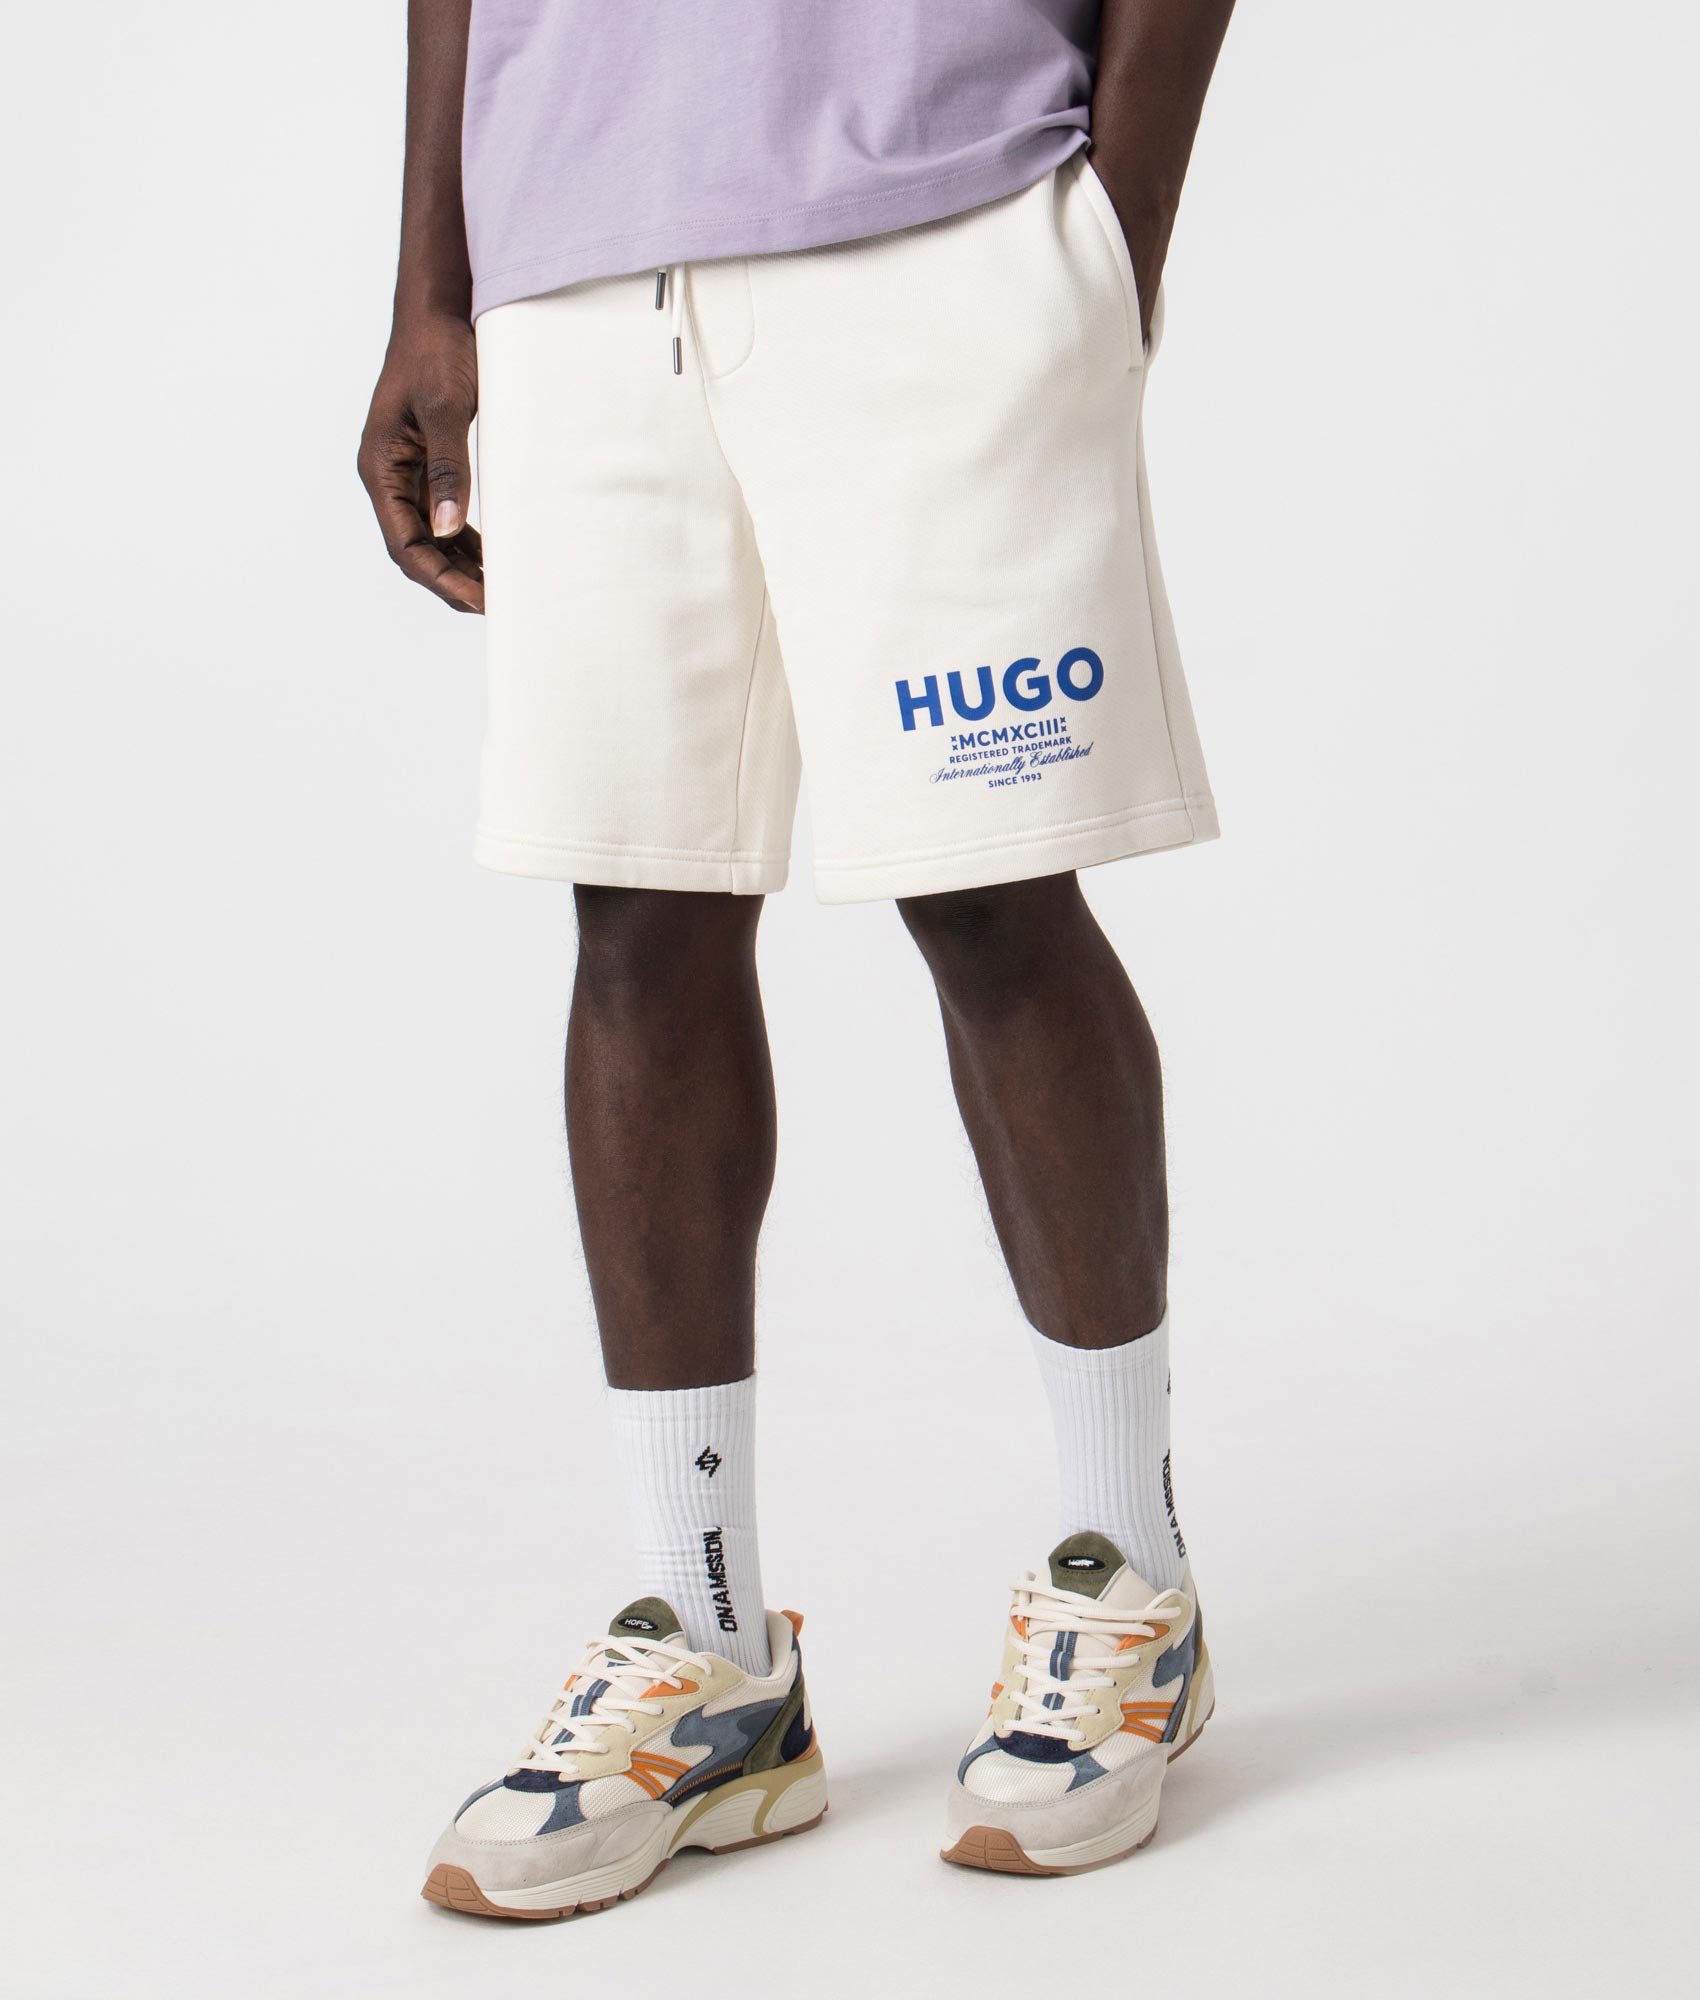 HUGO Mens Relaxed Fit Nomario Sweat Shorts - Colour: 121 Open White - Size: Medium